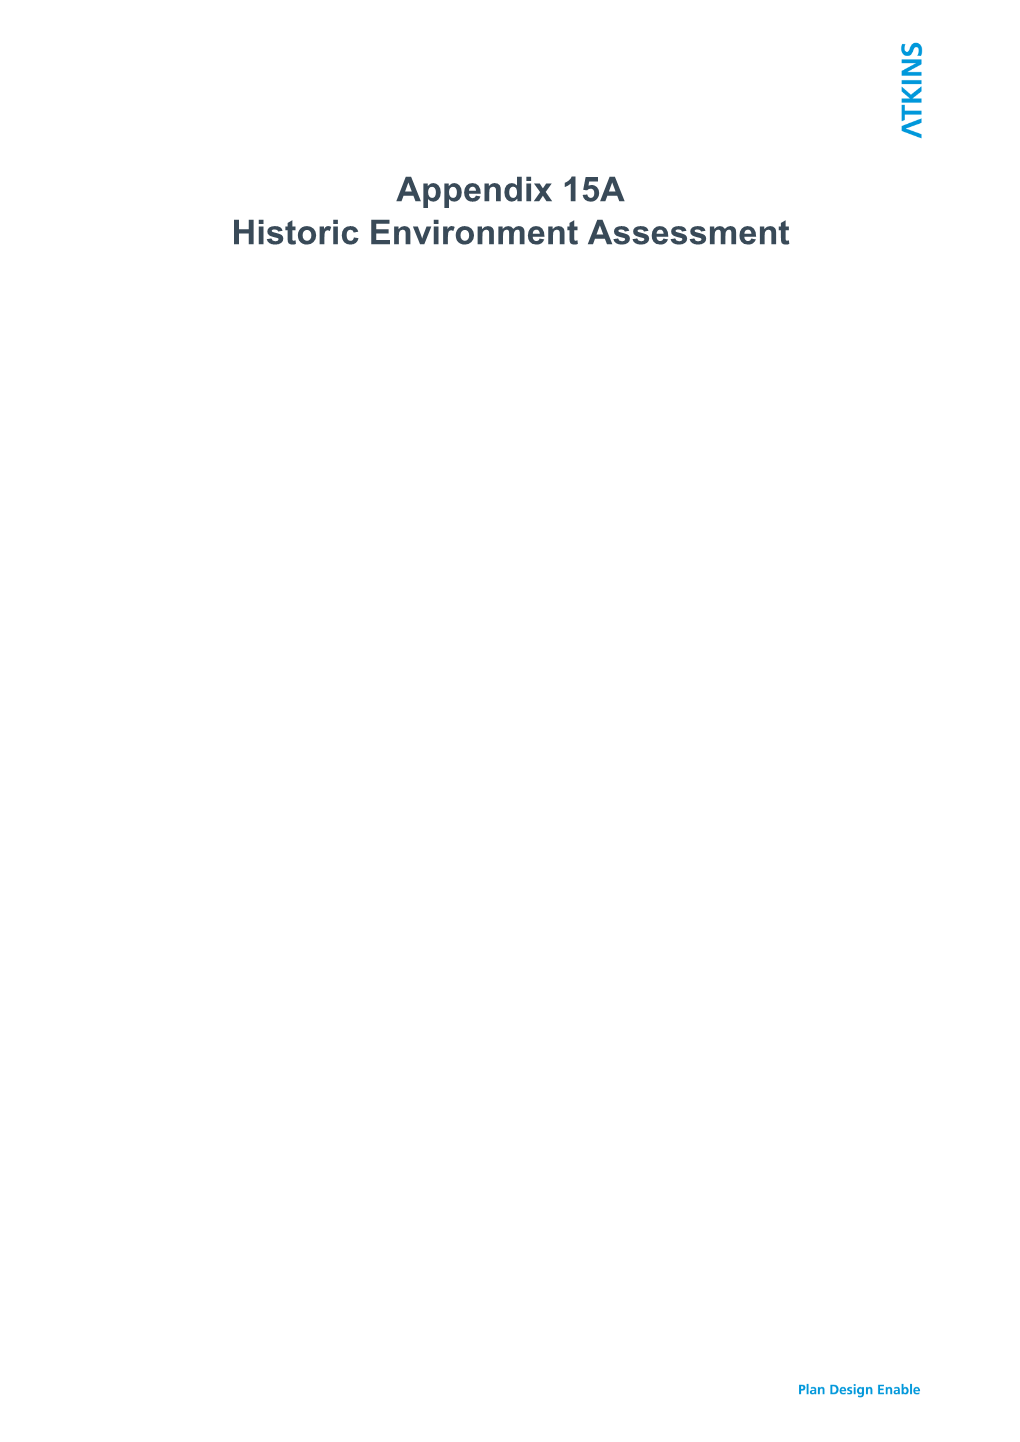 App 15A Historic Environment Assessment